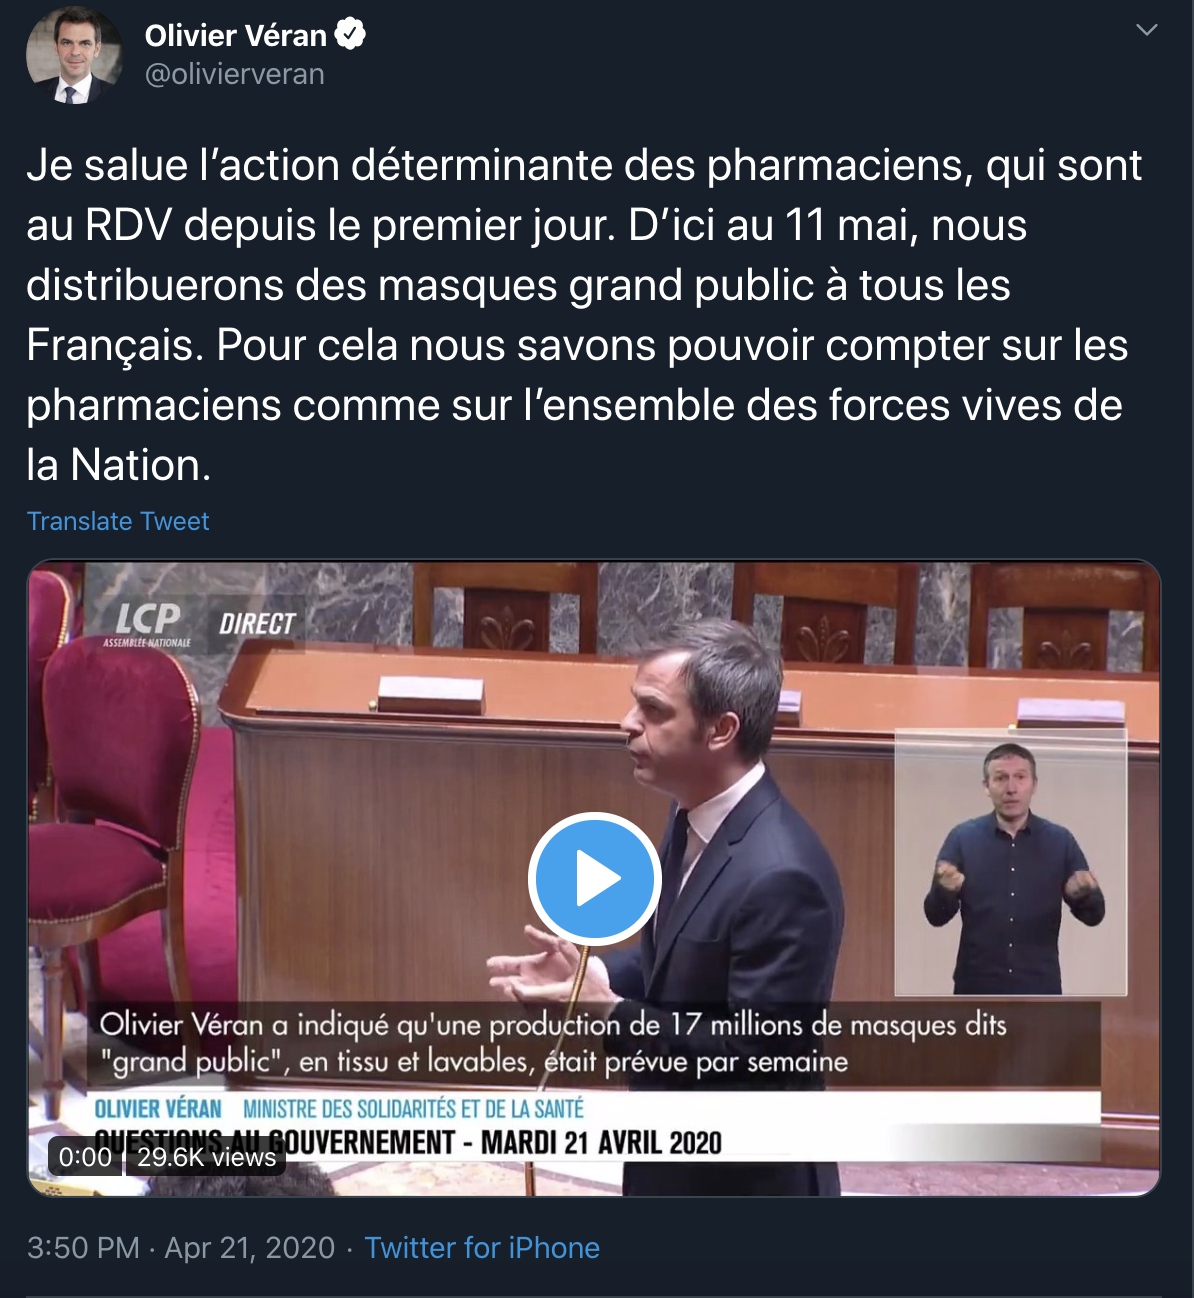 Olivier Véran remercie les Pharmaciens sur Twitter